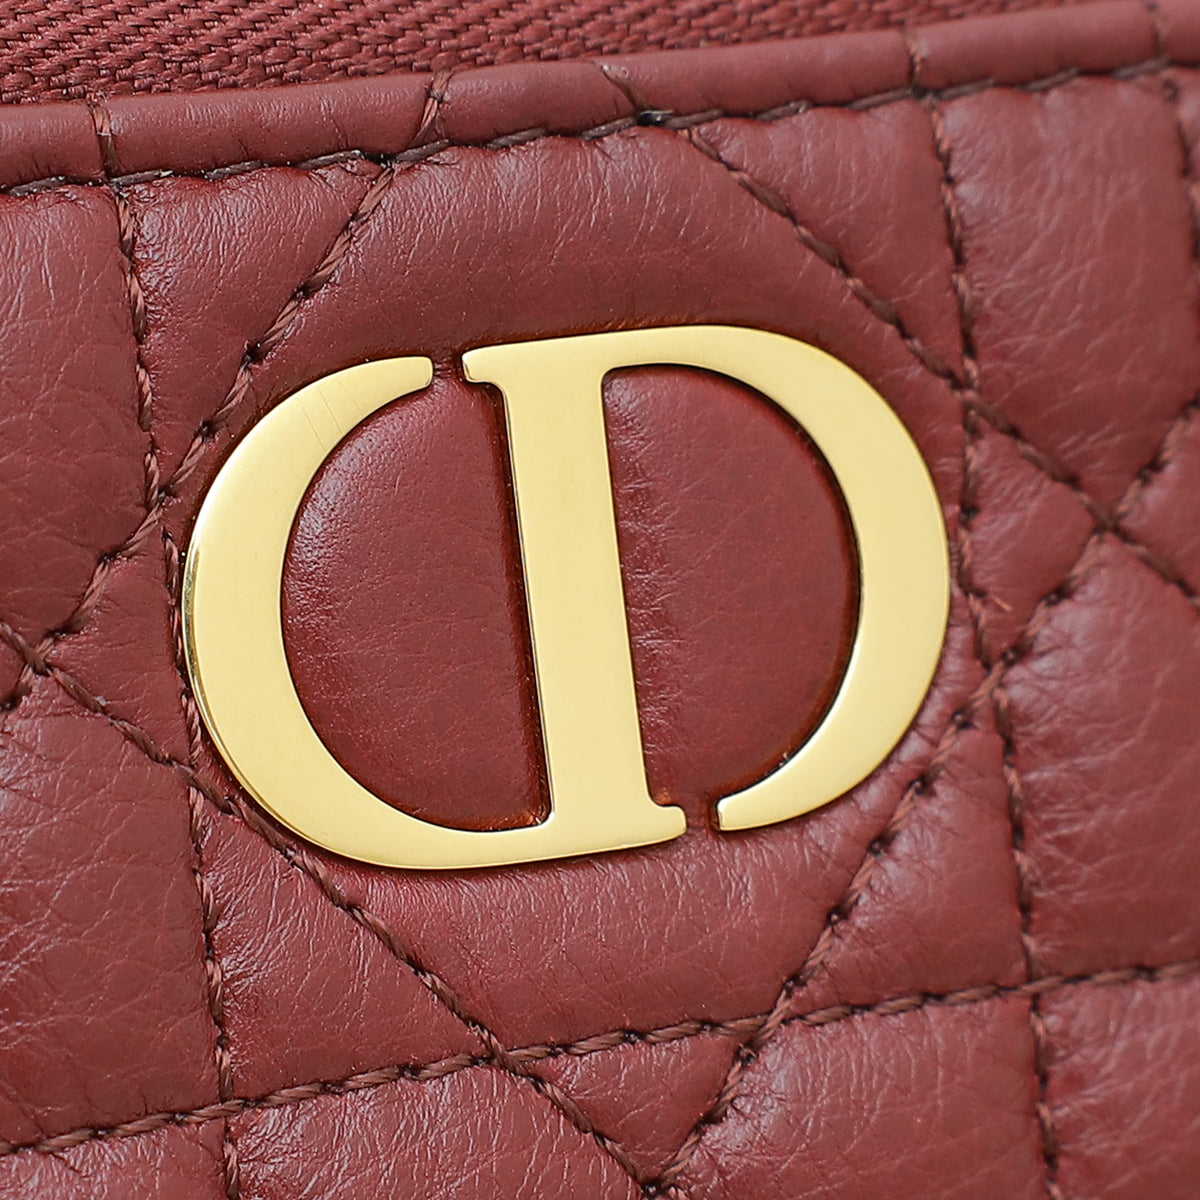 Christian Dior Burgundy Caro Double Pouch Bag